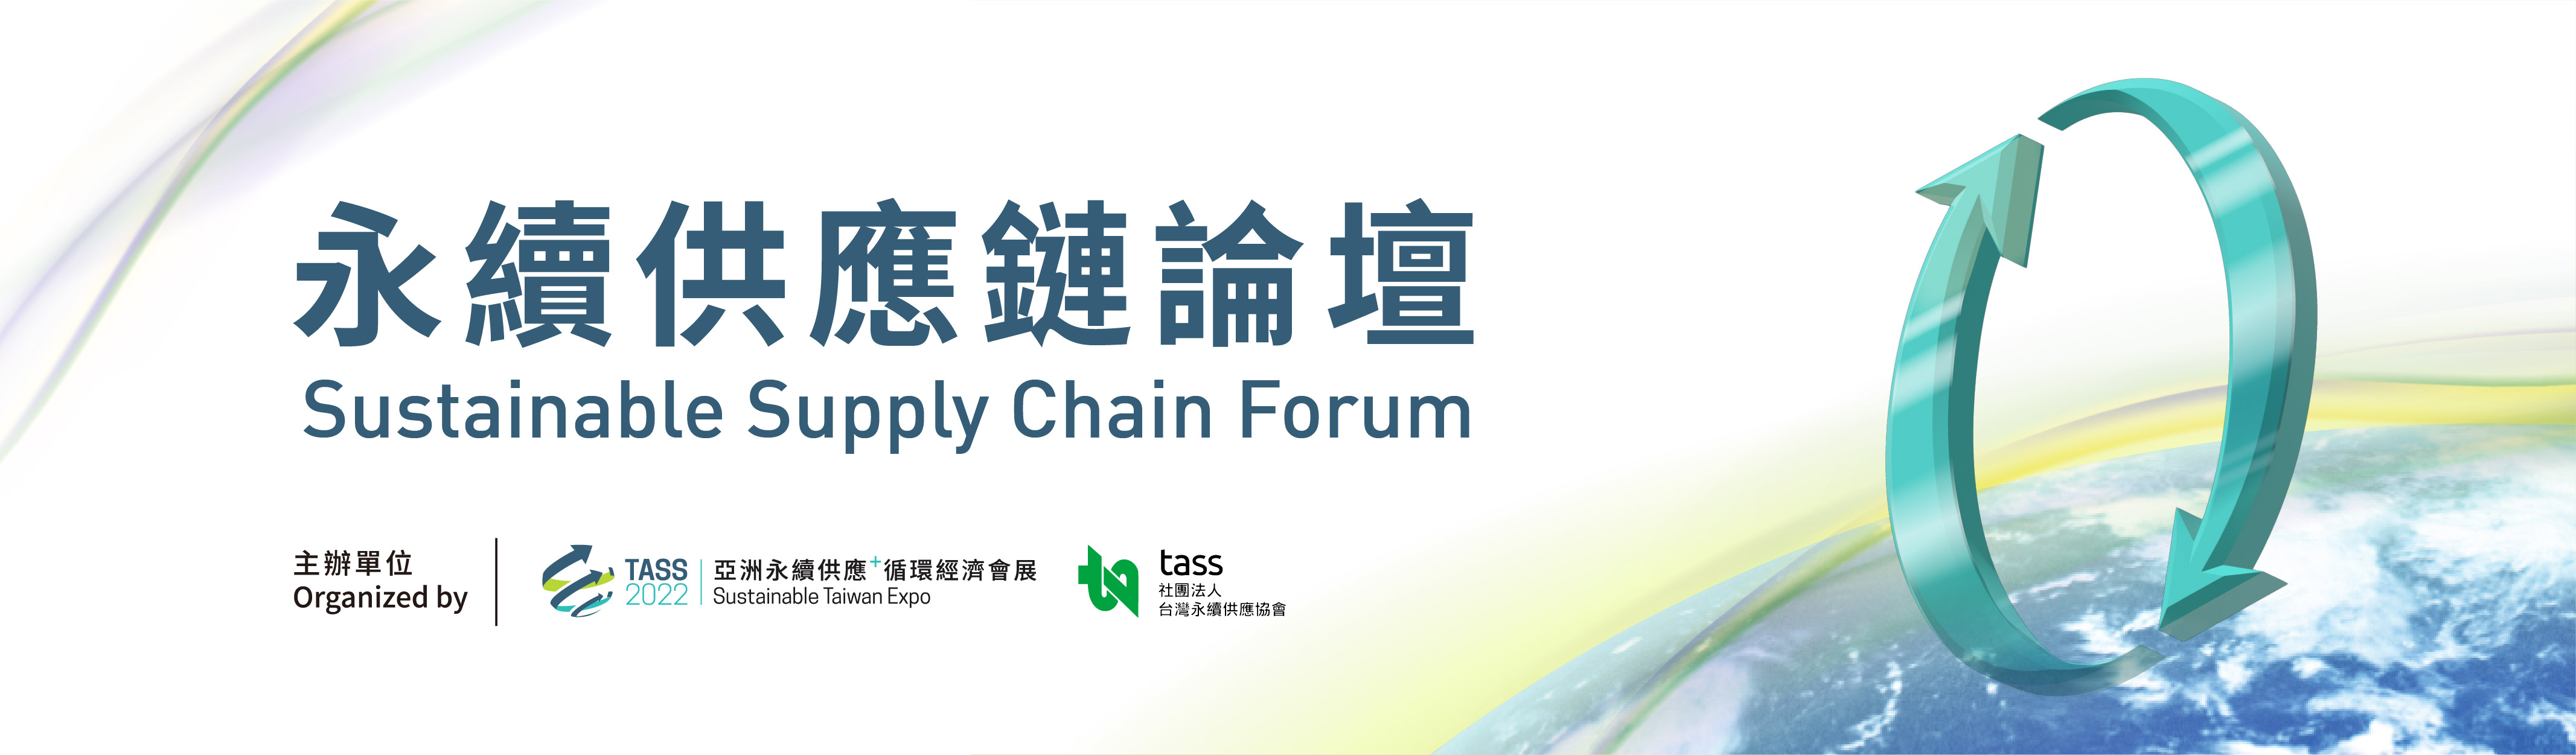 Sustainable Supply Chain Forum